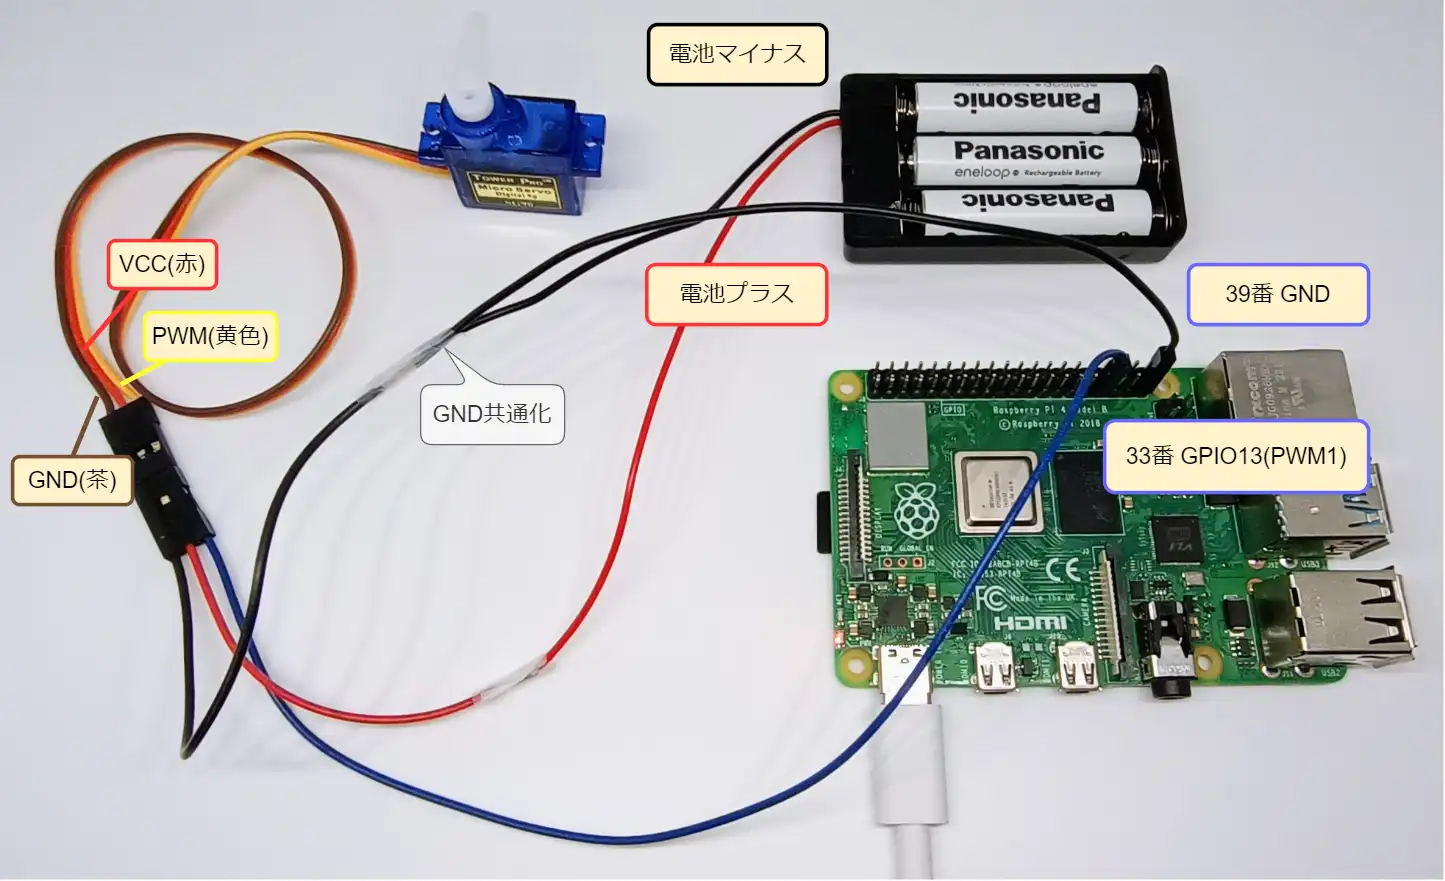 RaspberryPi4とSG90を接続する方法を解説した画像